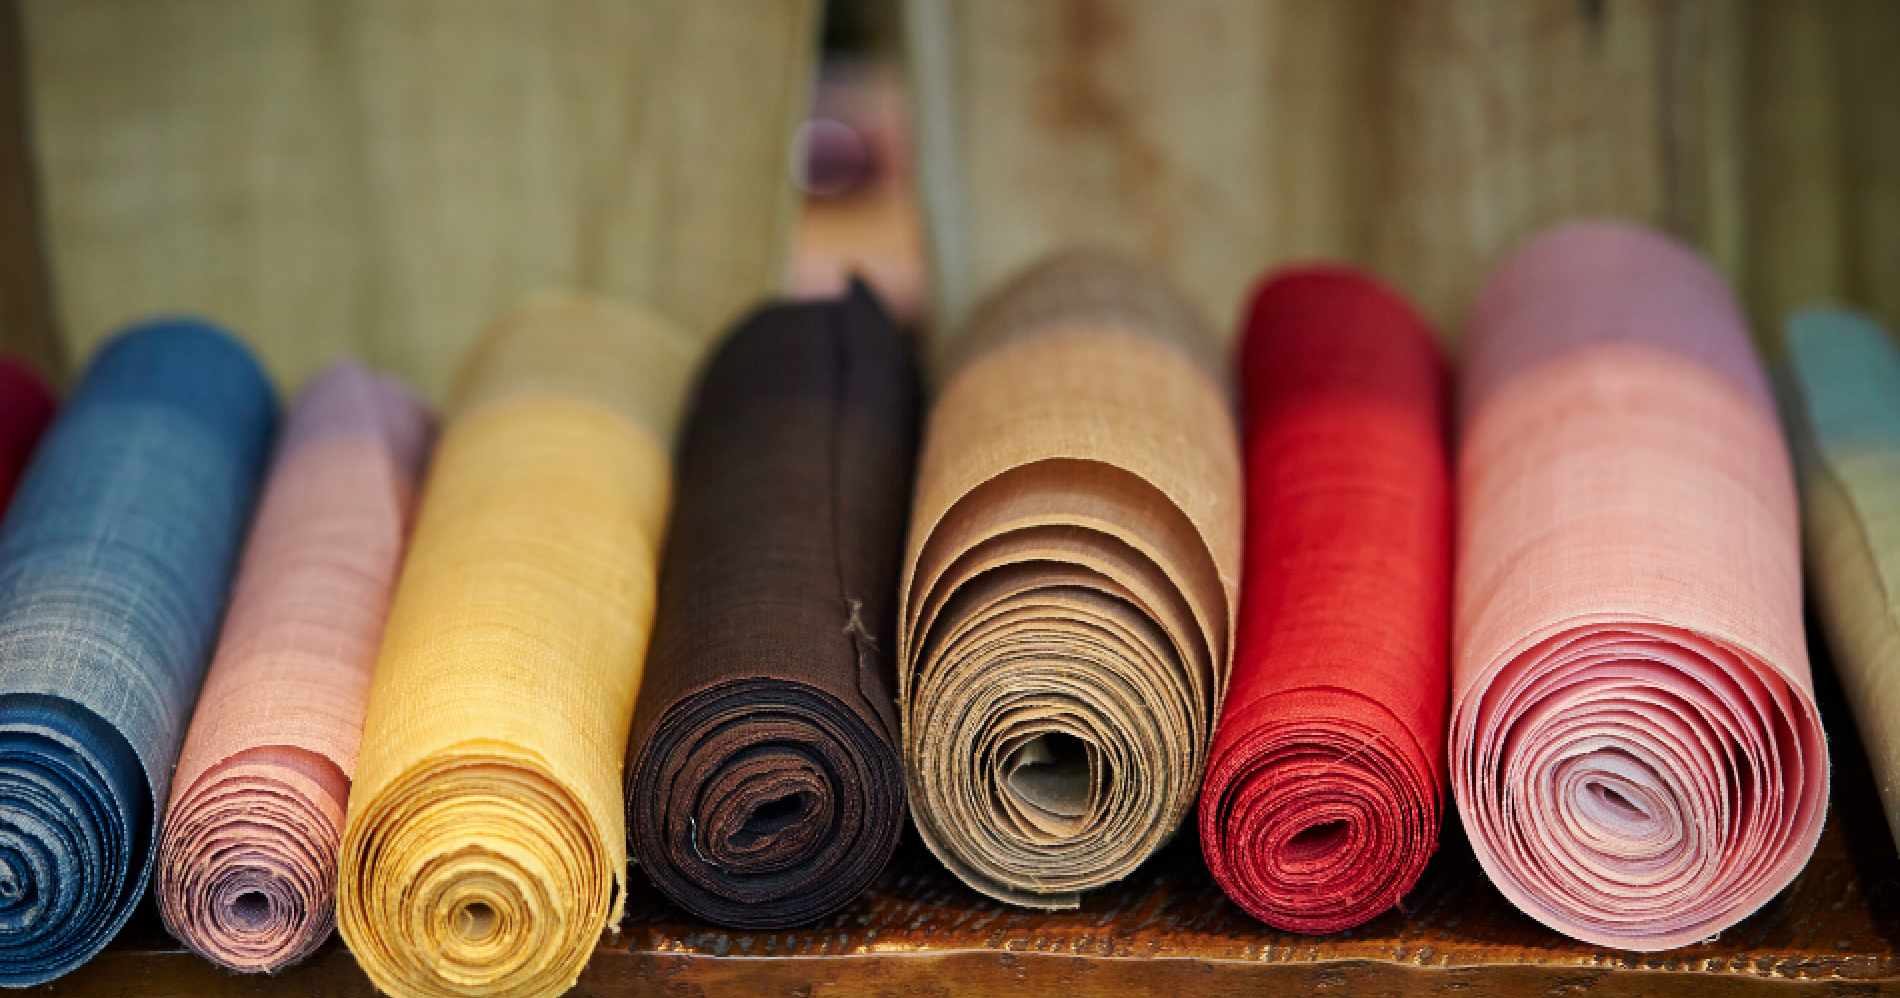 Kinerja Industri Tekstil Positif Berkat Peningkatan PMI Manufaktur Illustration Web Bisnis Muda - Canva